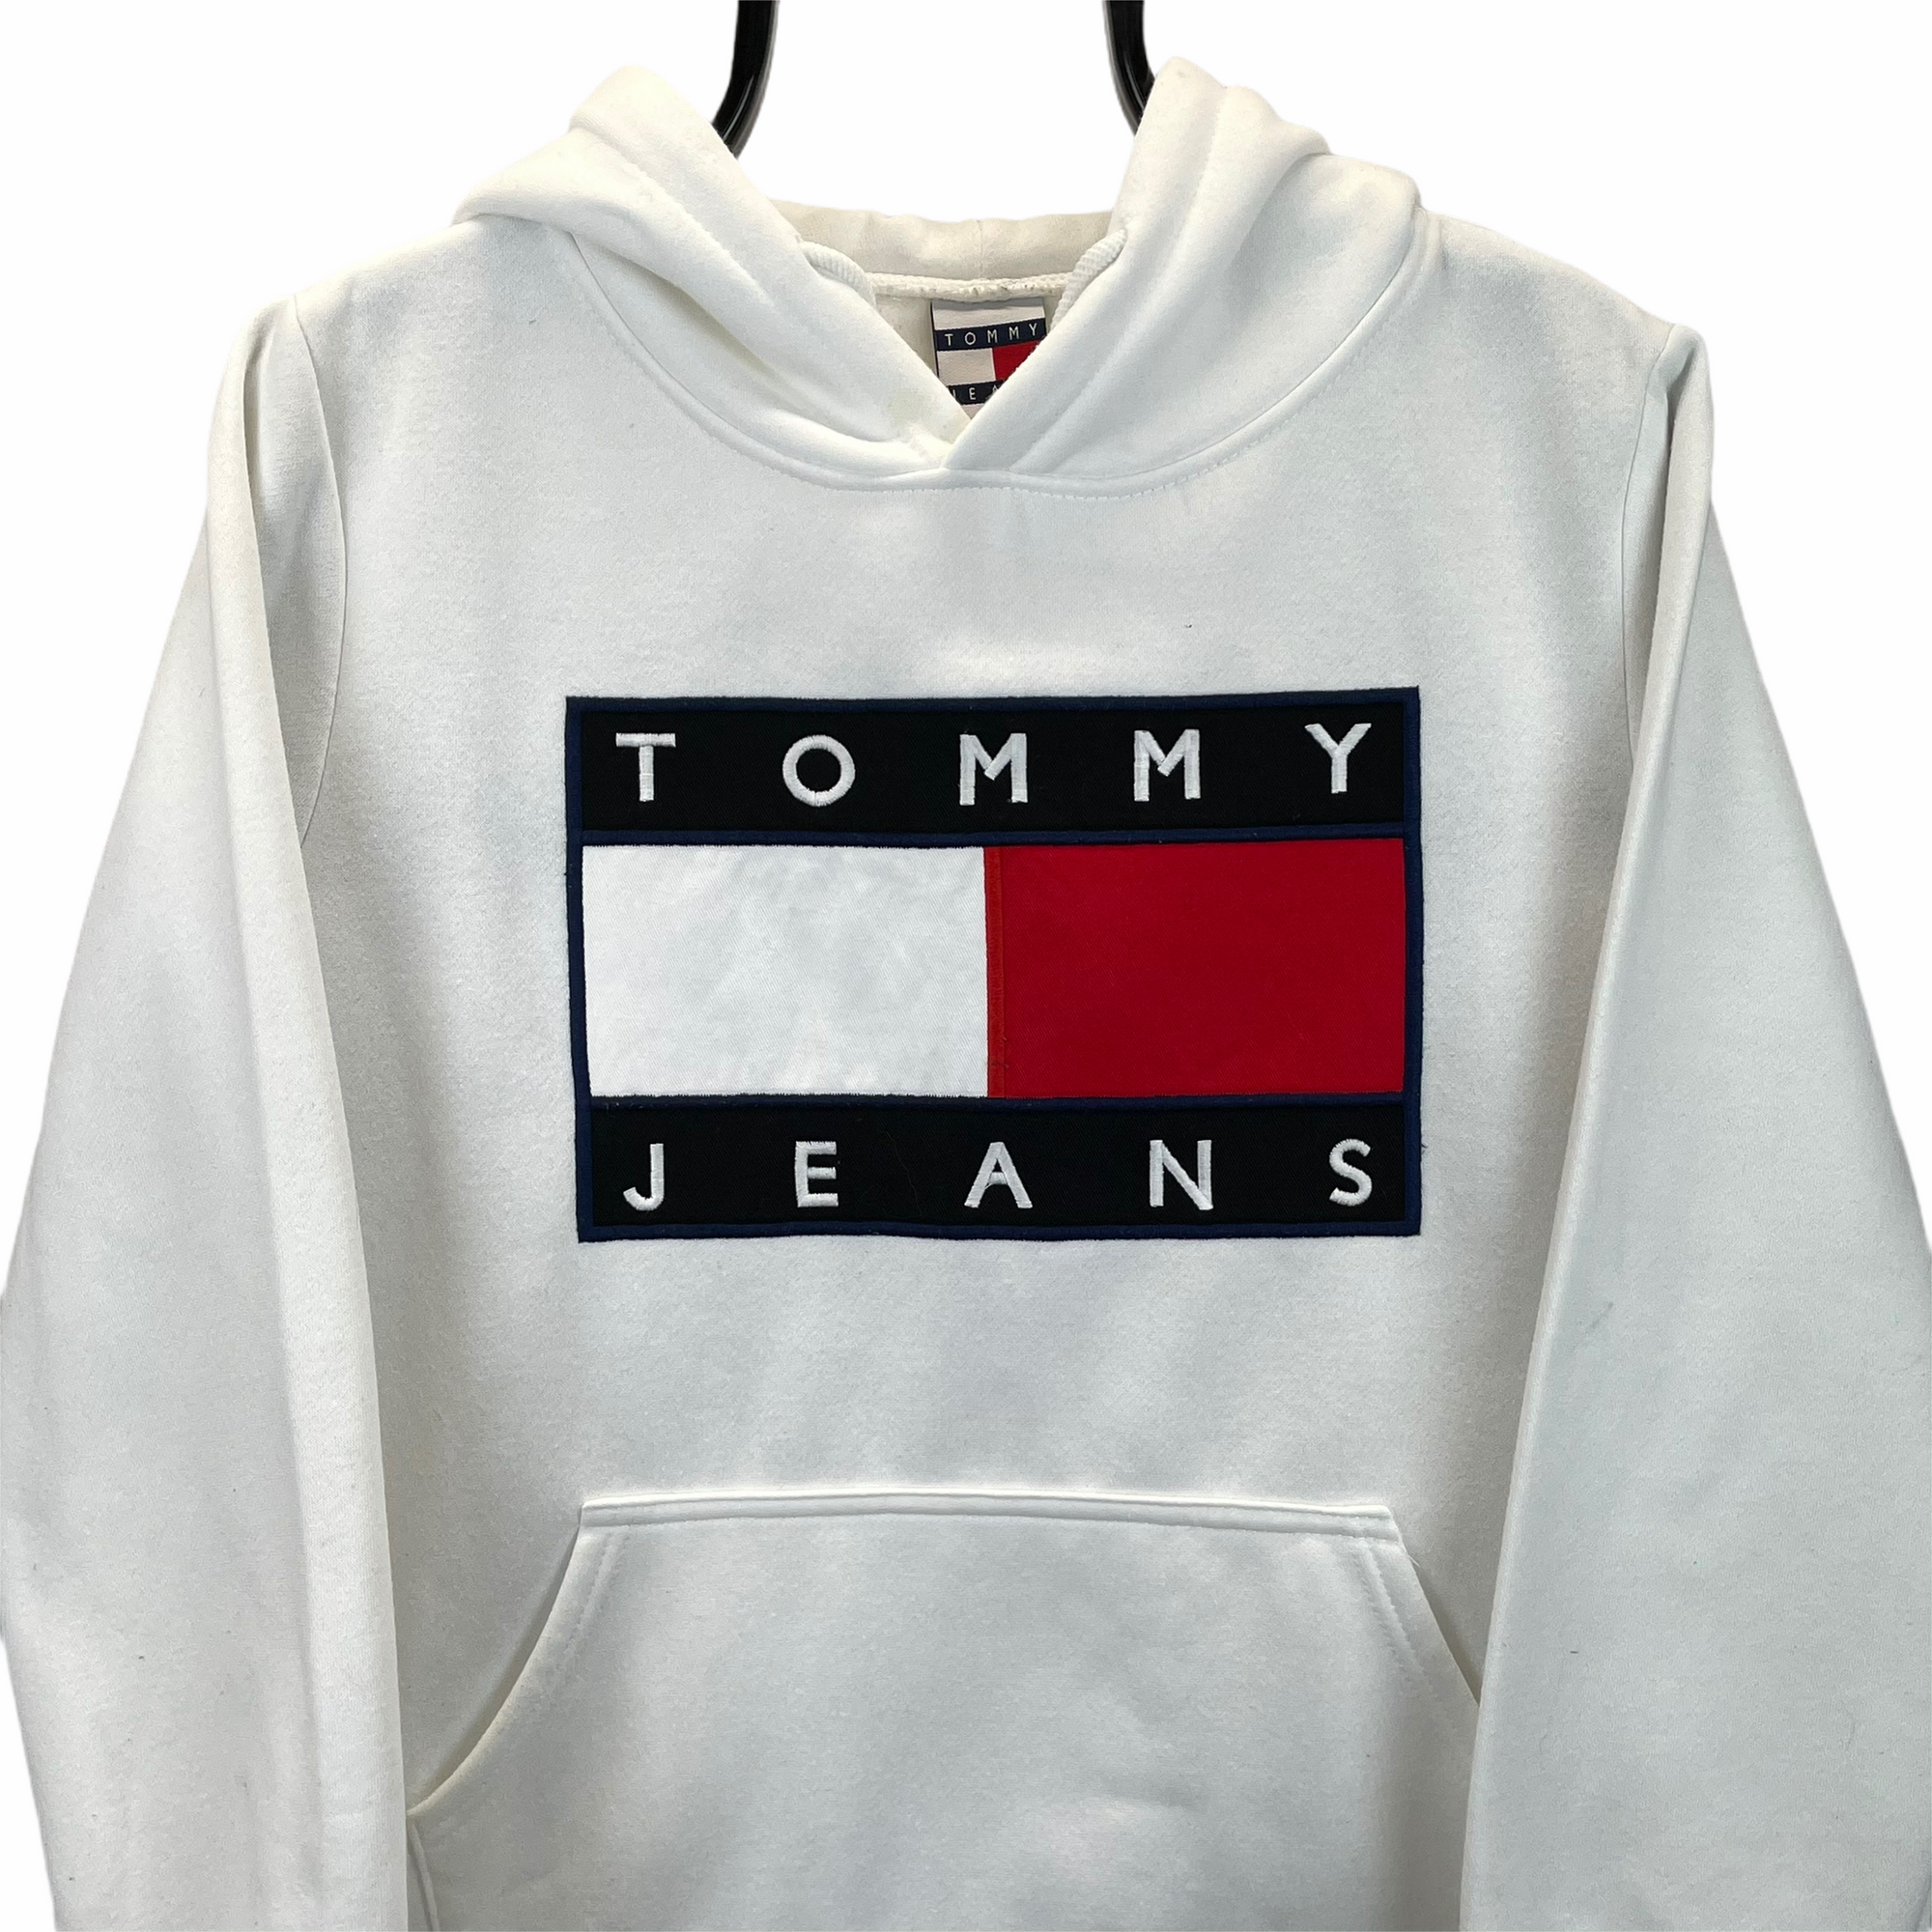 Vintage Tommy Jeans Hoodie in White - Men's Small/Women's Medium